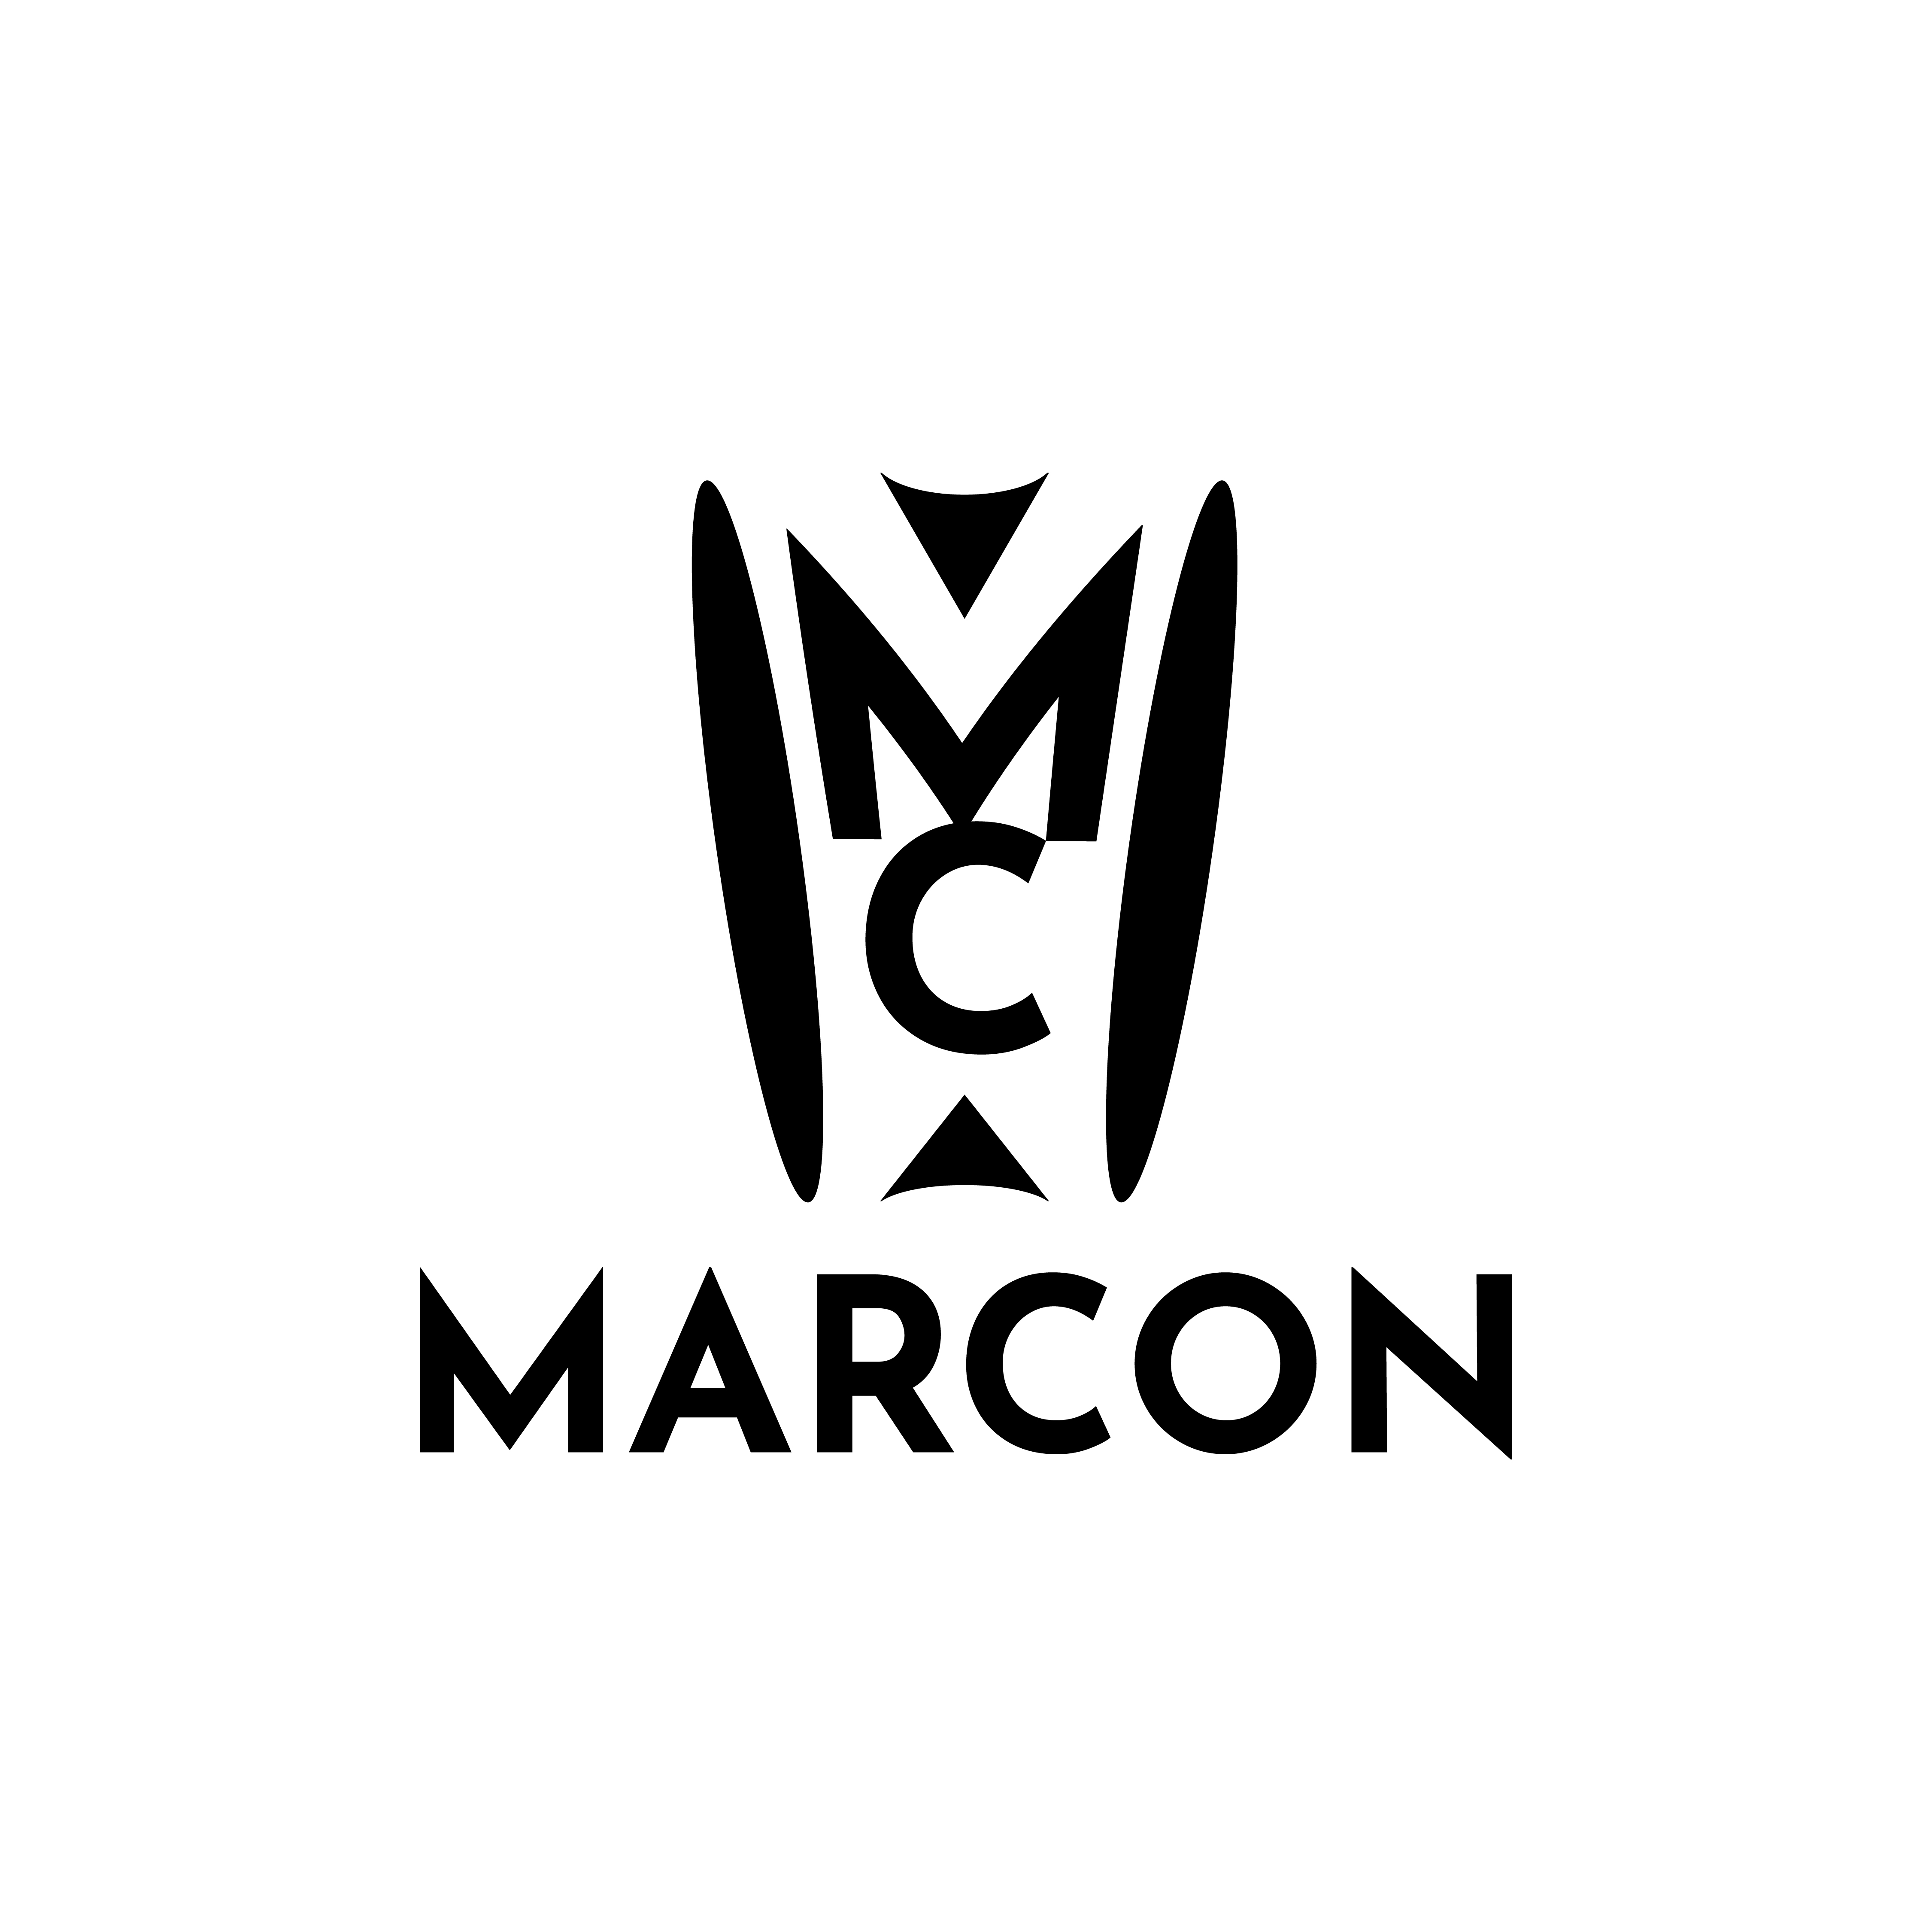 MARCON_LOGO_BLACK_1080x1080-05